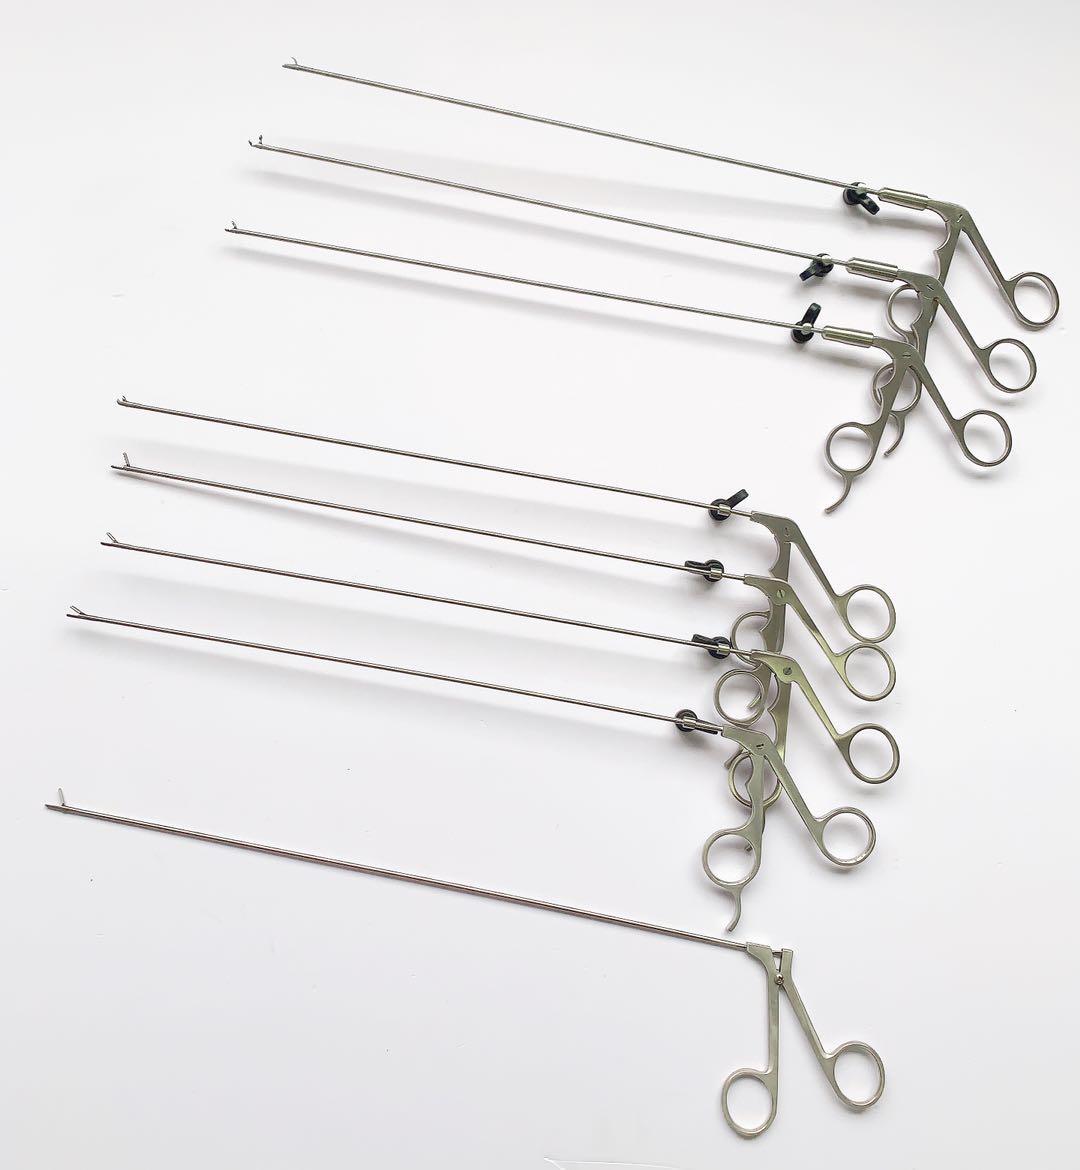 Nanyu Spine Endoscope for  Intervertebral Foramen Instruments set Orthopaedics Surgical Instruments(new styles)